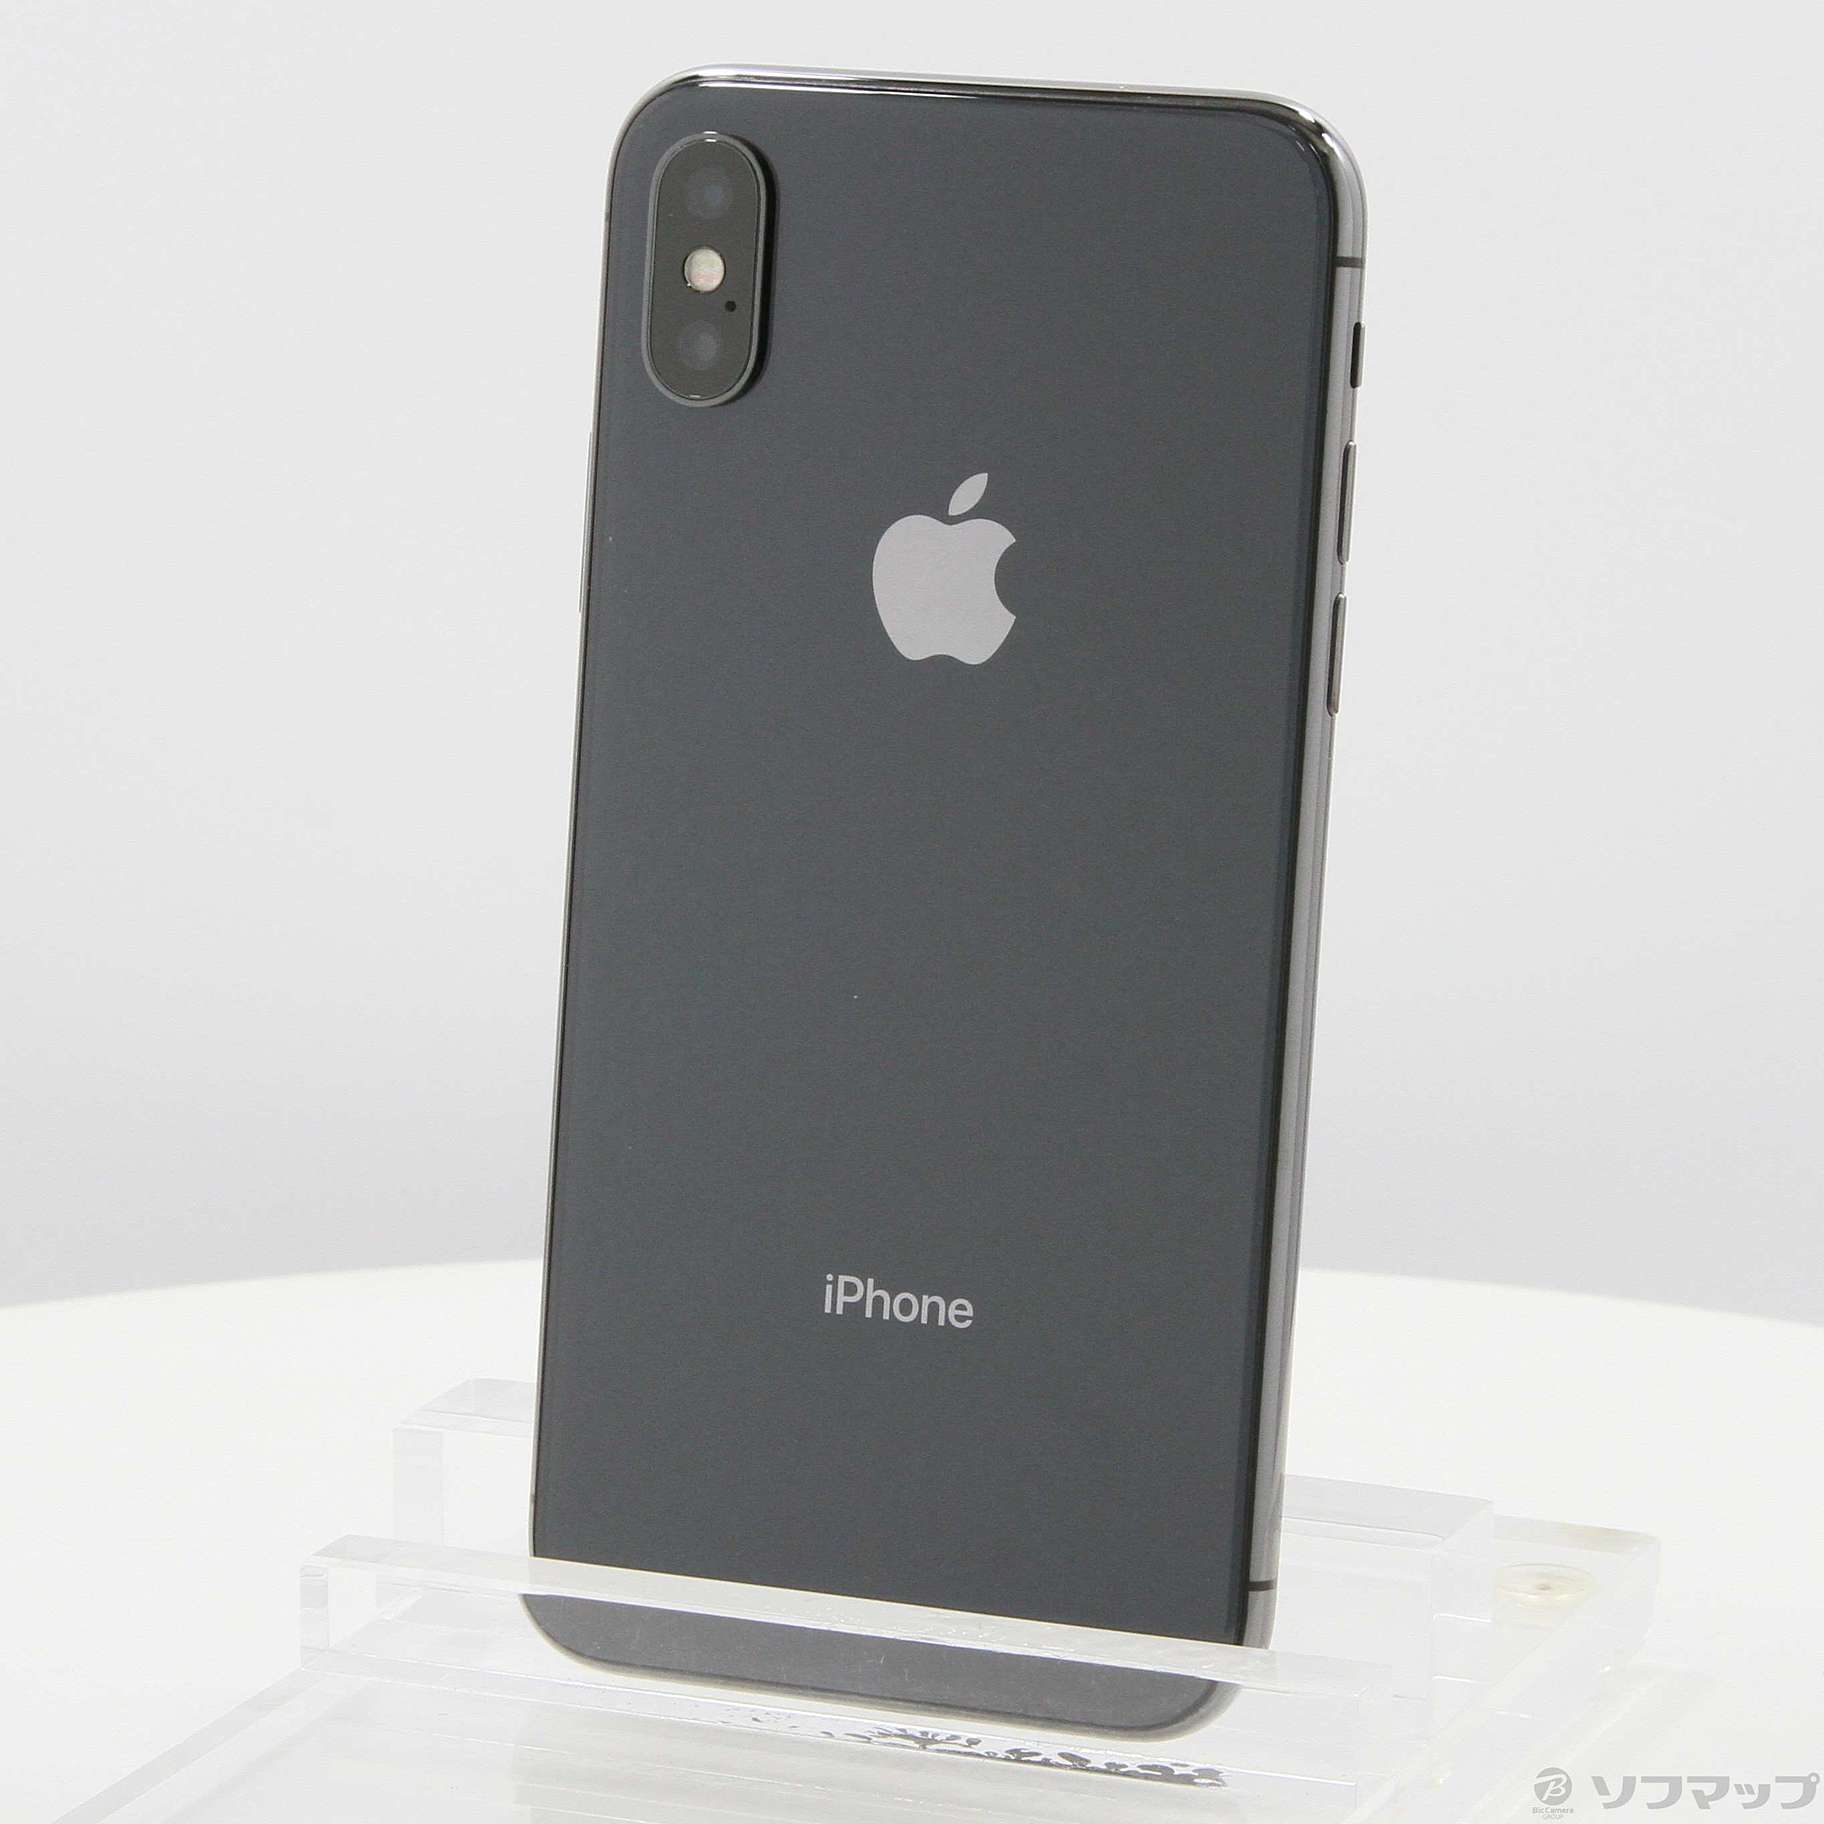 iPhoneX 256GB Space Gray SoftBank | innoveering.net